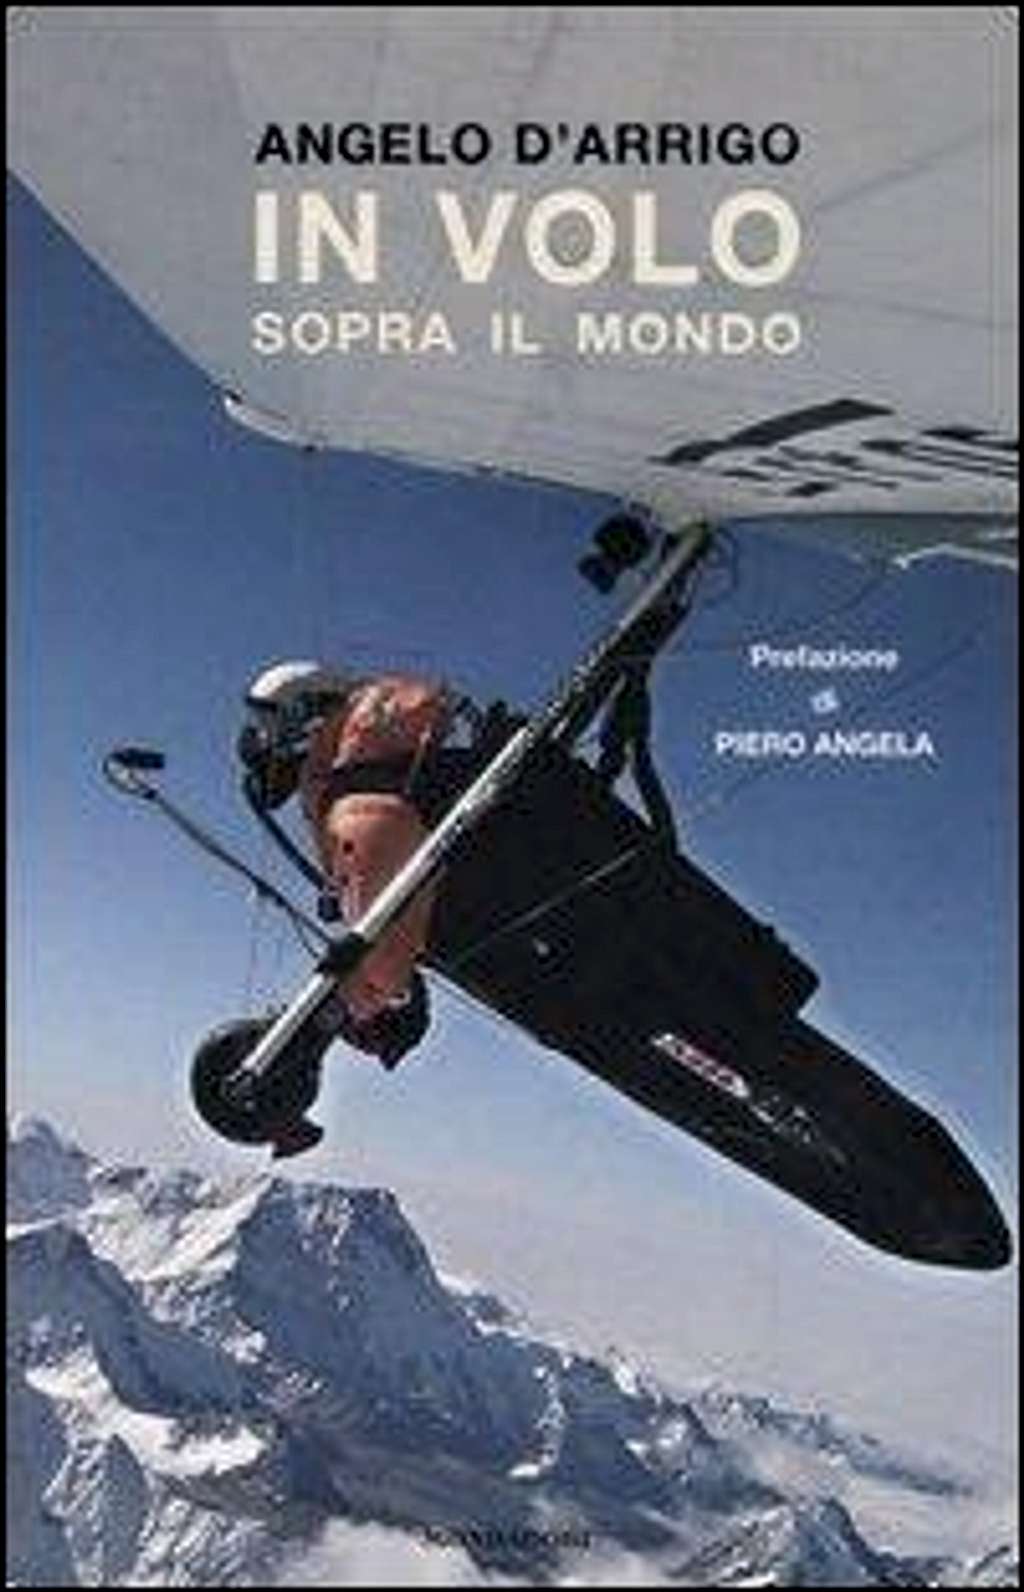 His book in italian version